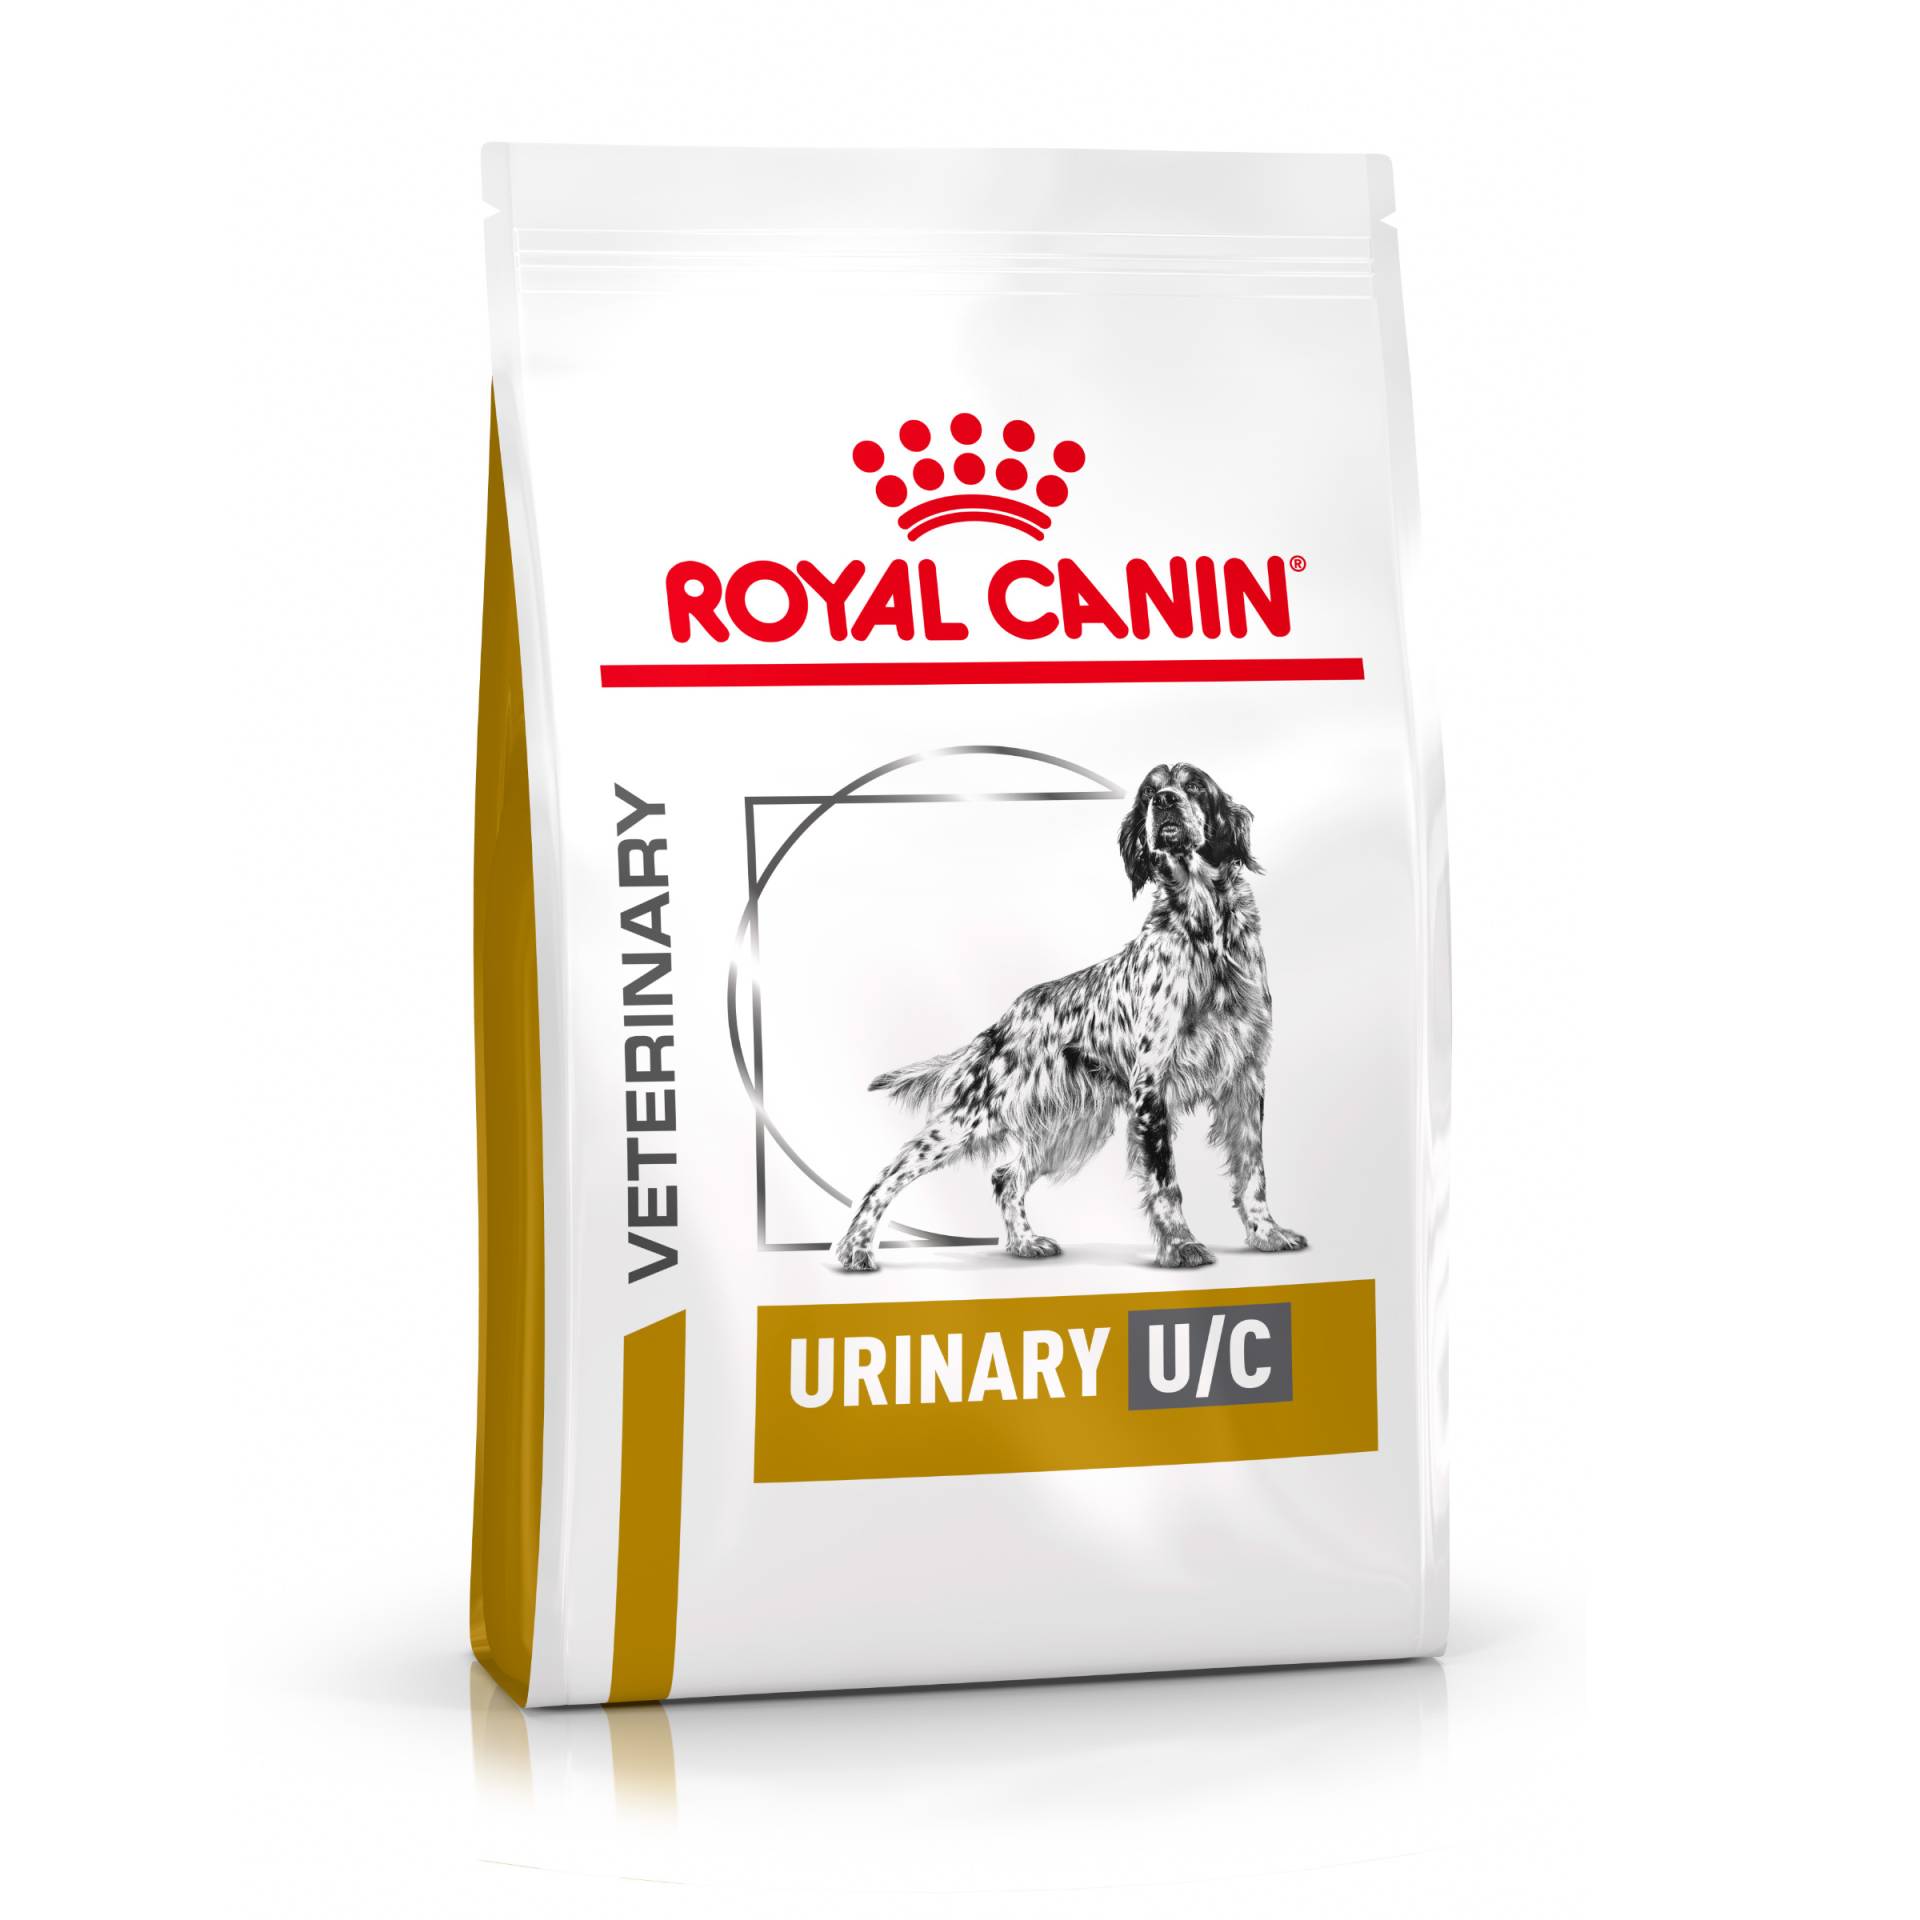 Royal Canin Veterinary Canine Urinary U/C - Sparpaket: 2 x 14 kg von Royal Canin Veterinary Diet